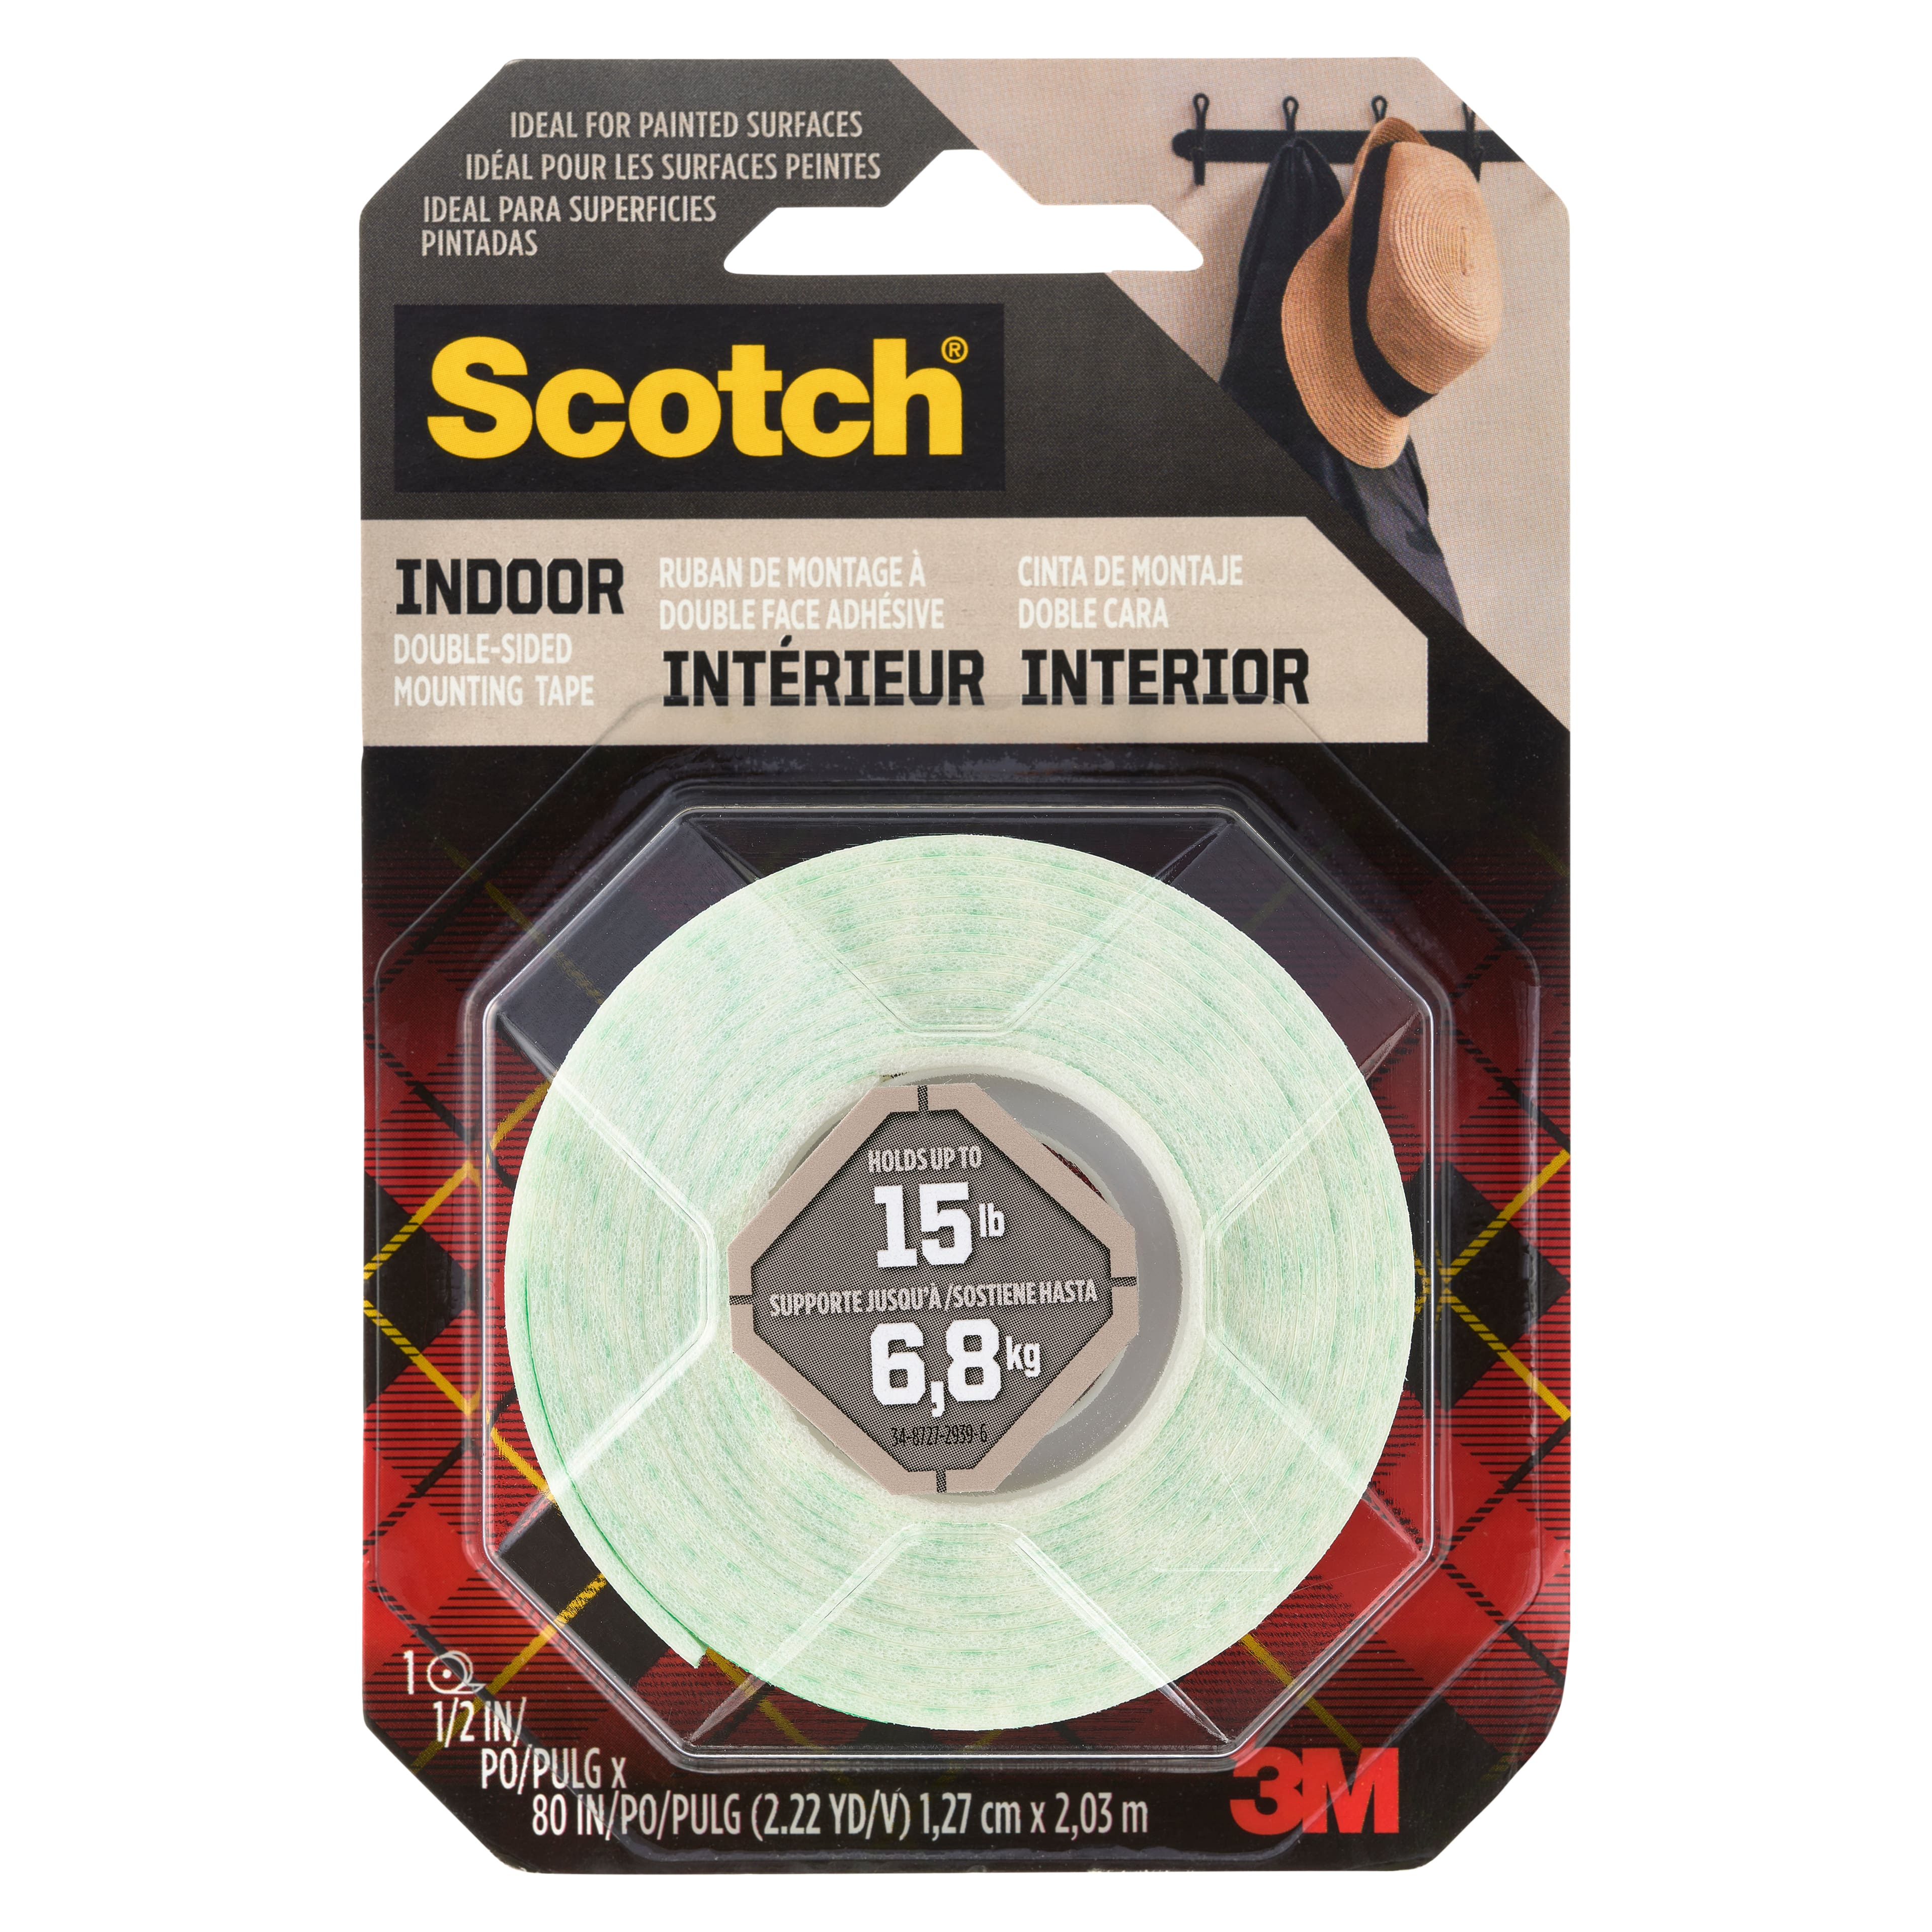 3M Scotch® Permanent Mounting Tape